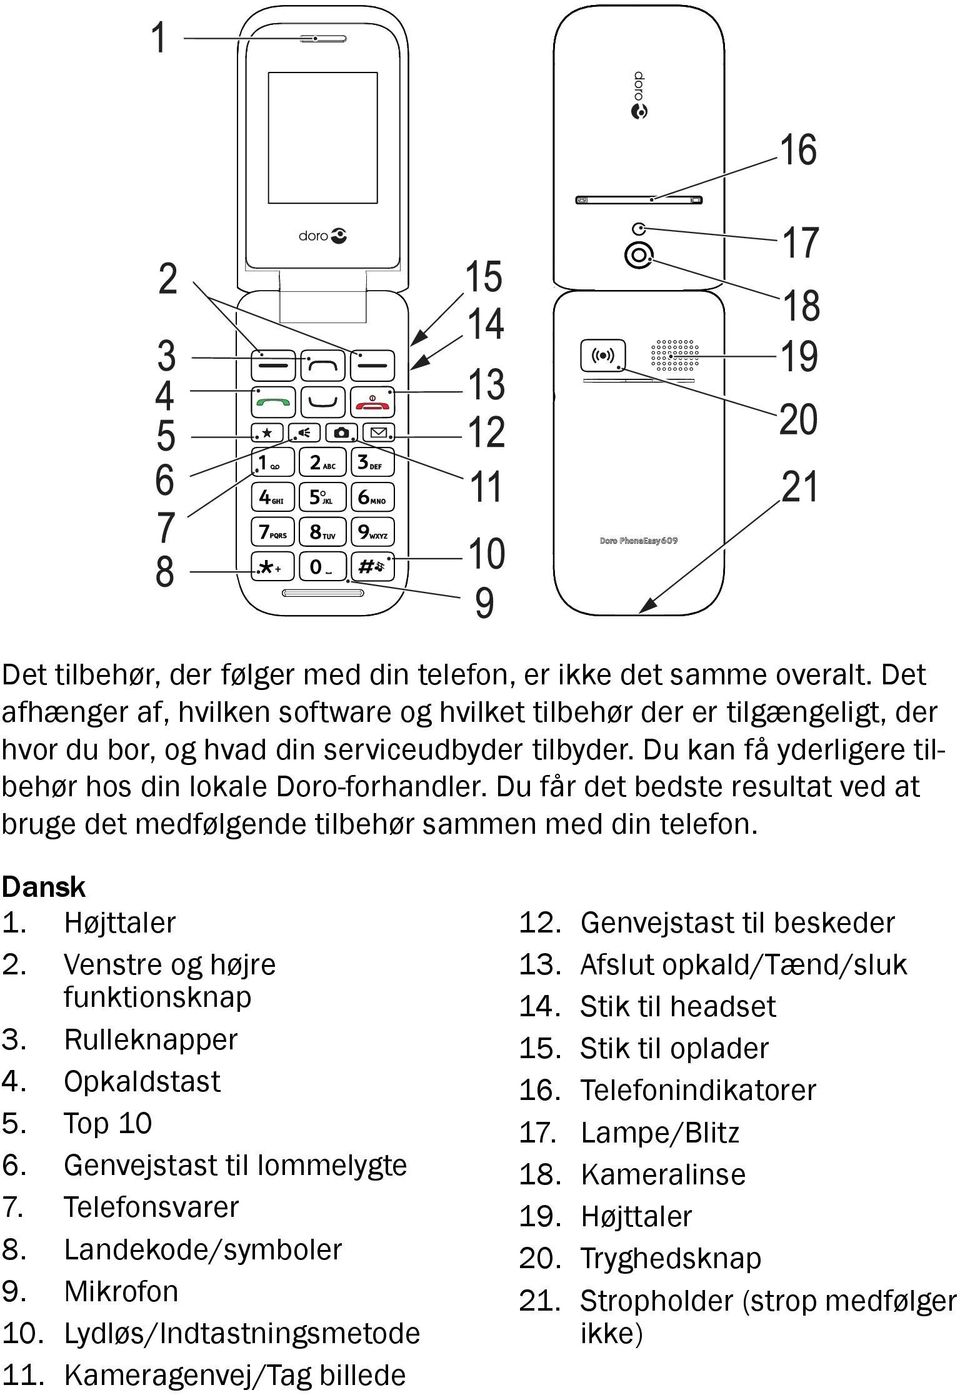 Doro PhoneEasy 609. Dansk - PDF Gratis download